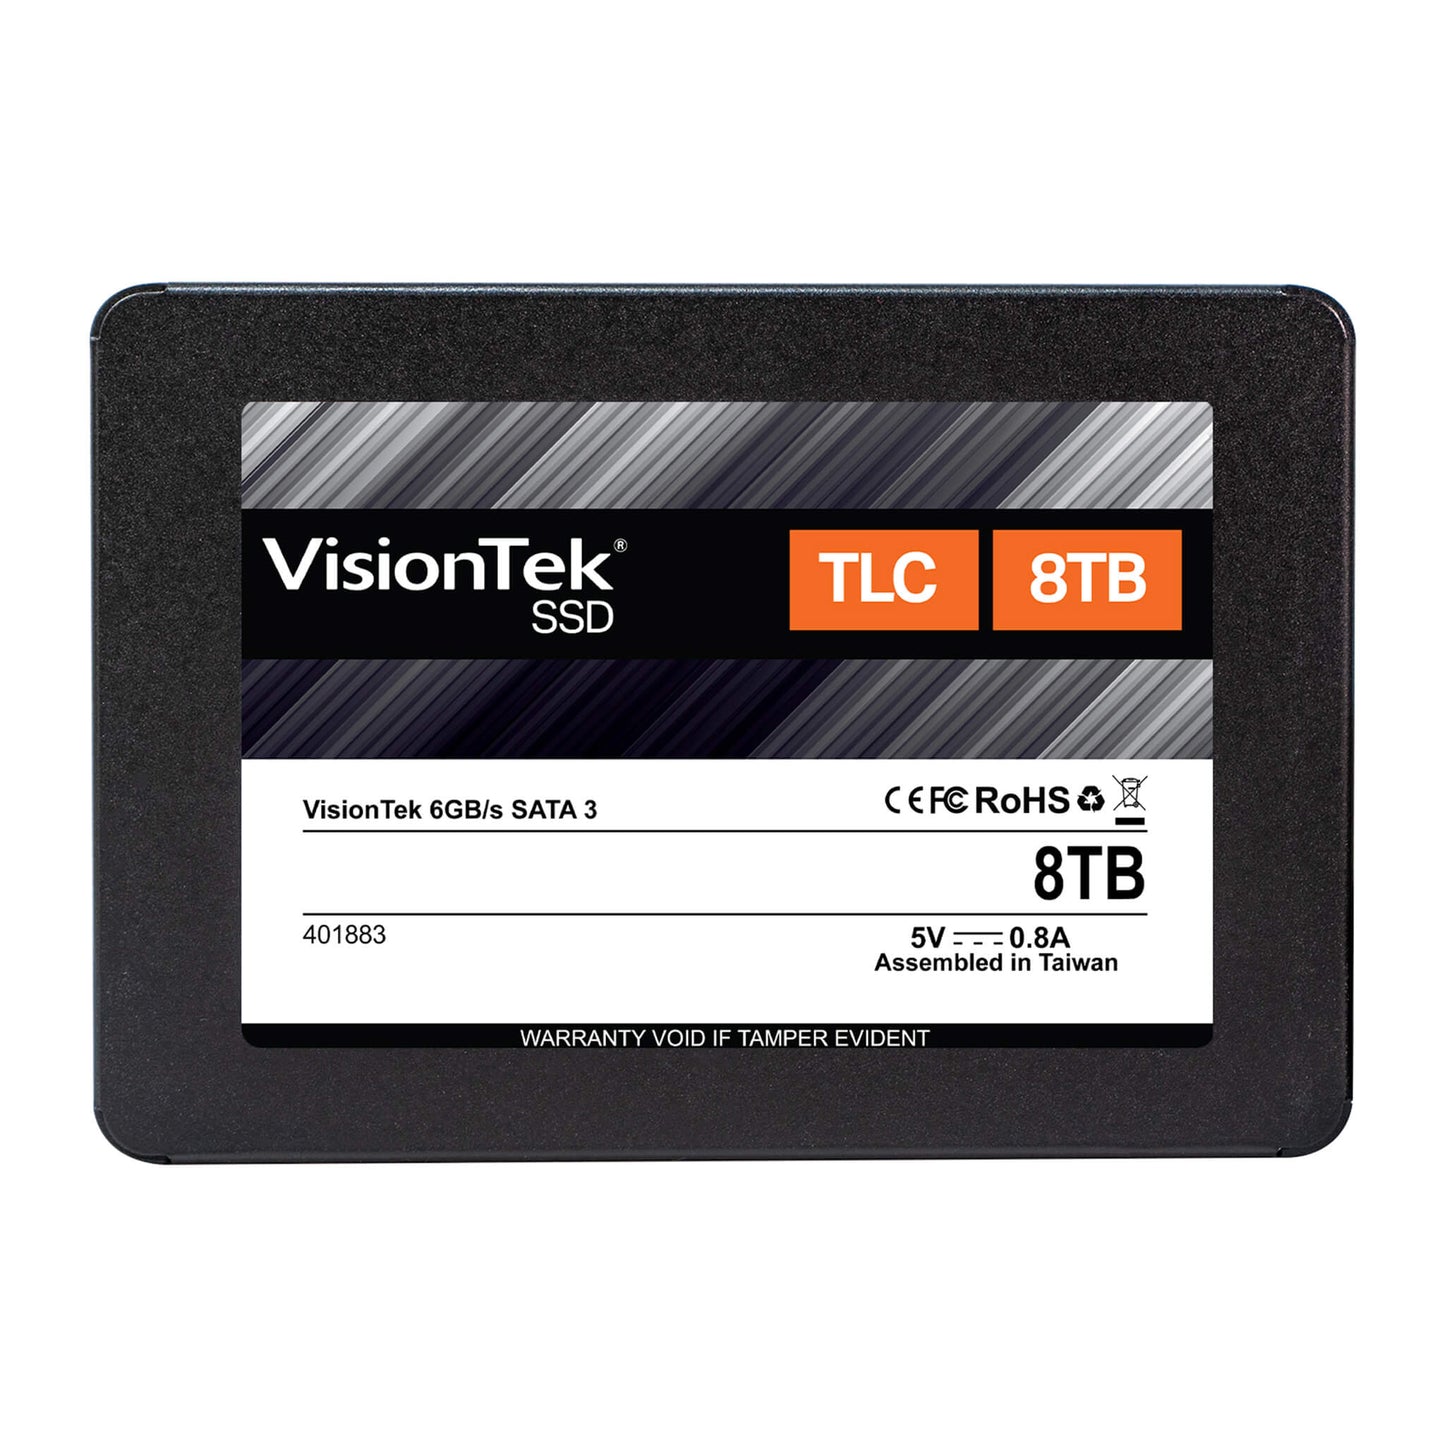 VisionTek TLC 7mm 2.5” SSD (SATA) - Enterprise